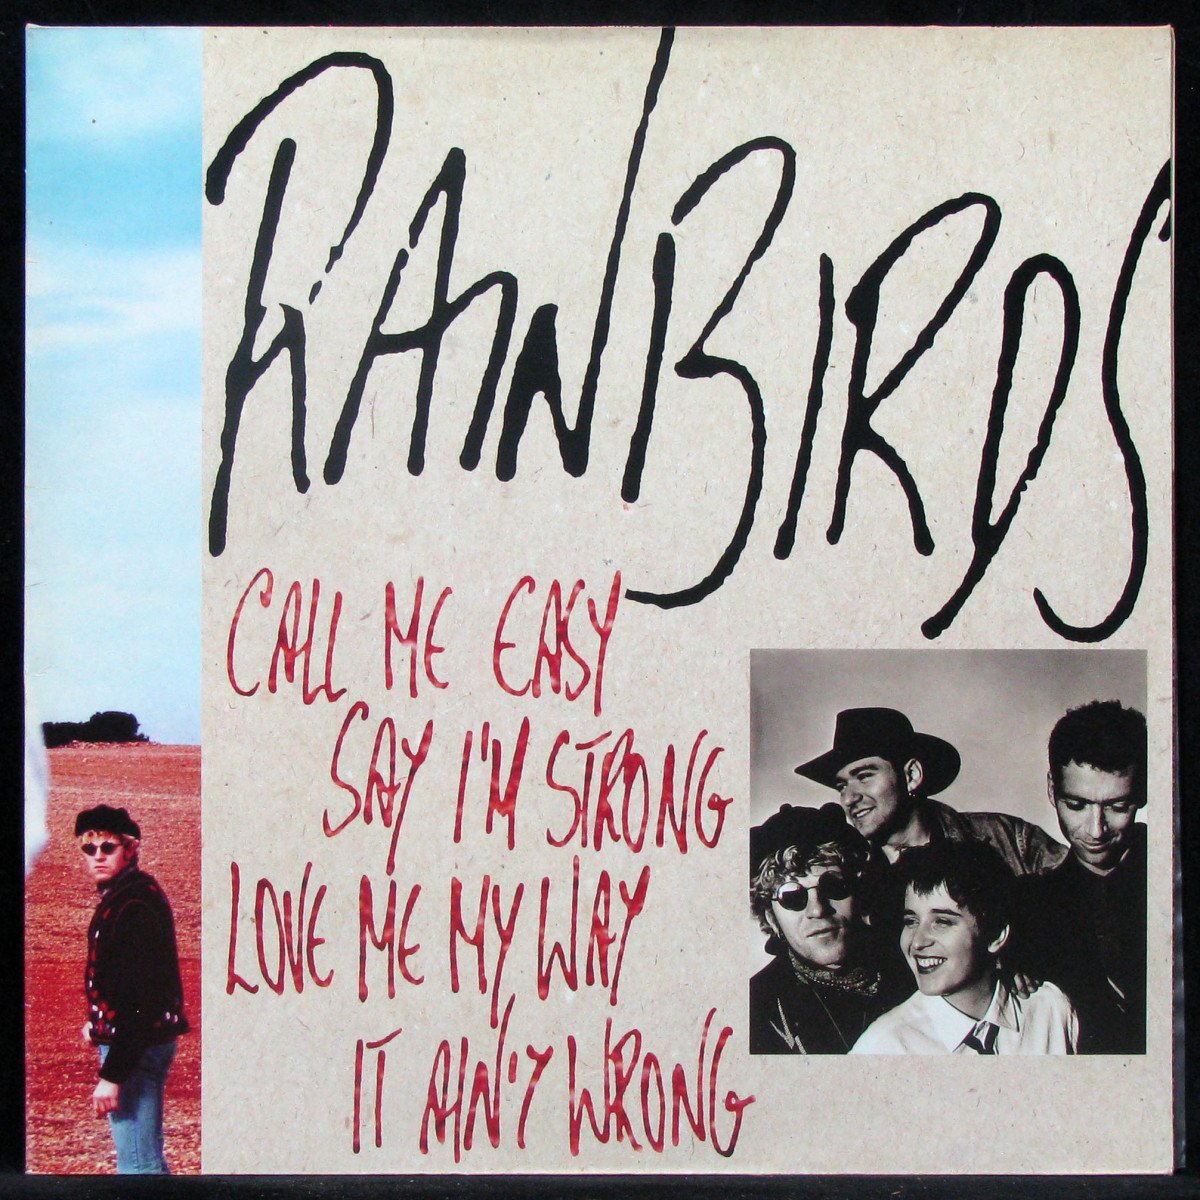 LP Rainbirds — Call Me Easy Say I'm Strong фото